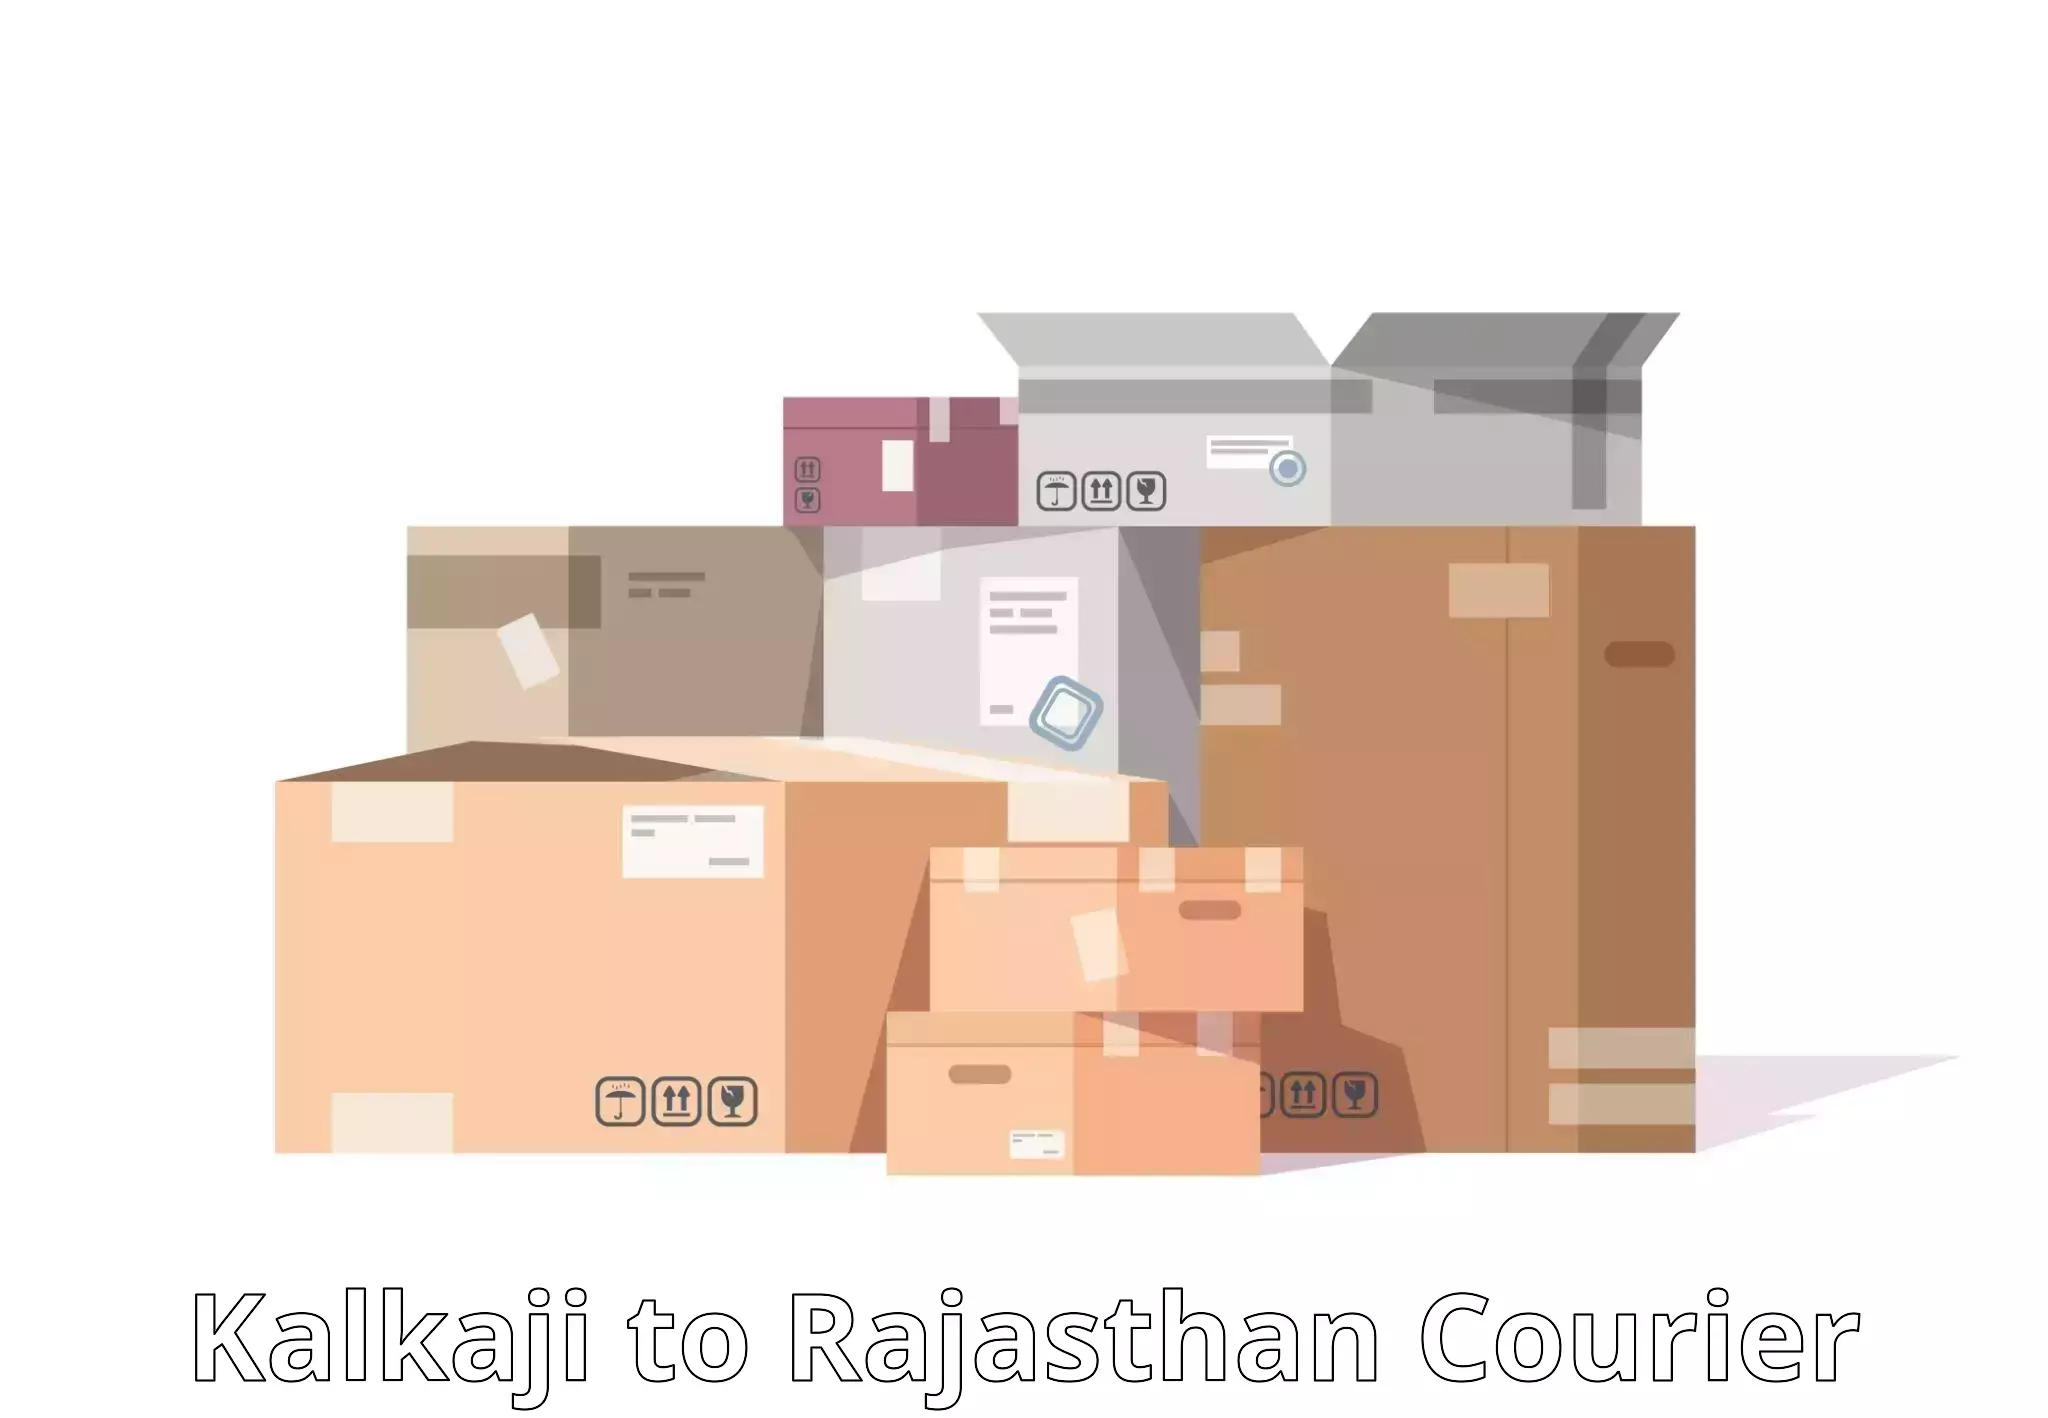 Package delivery network Kalkaji to Sambhar